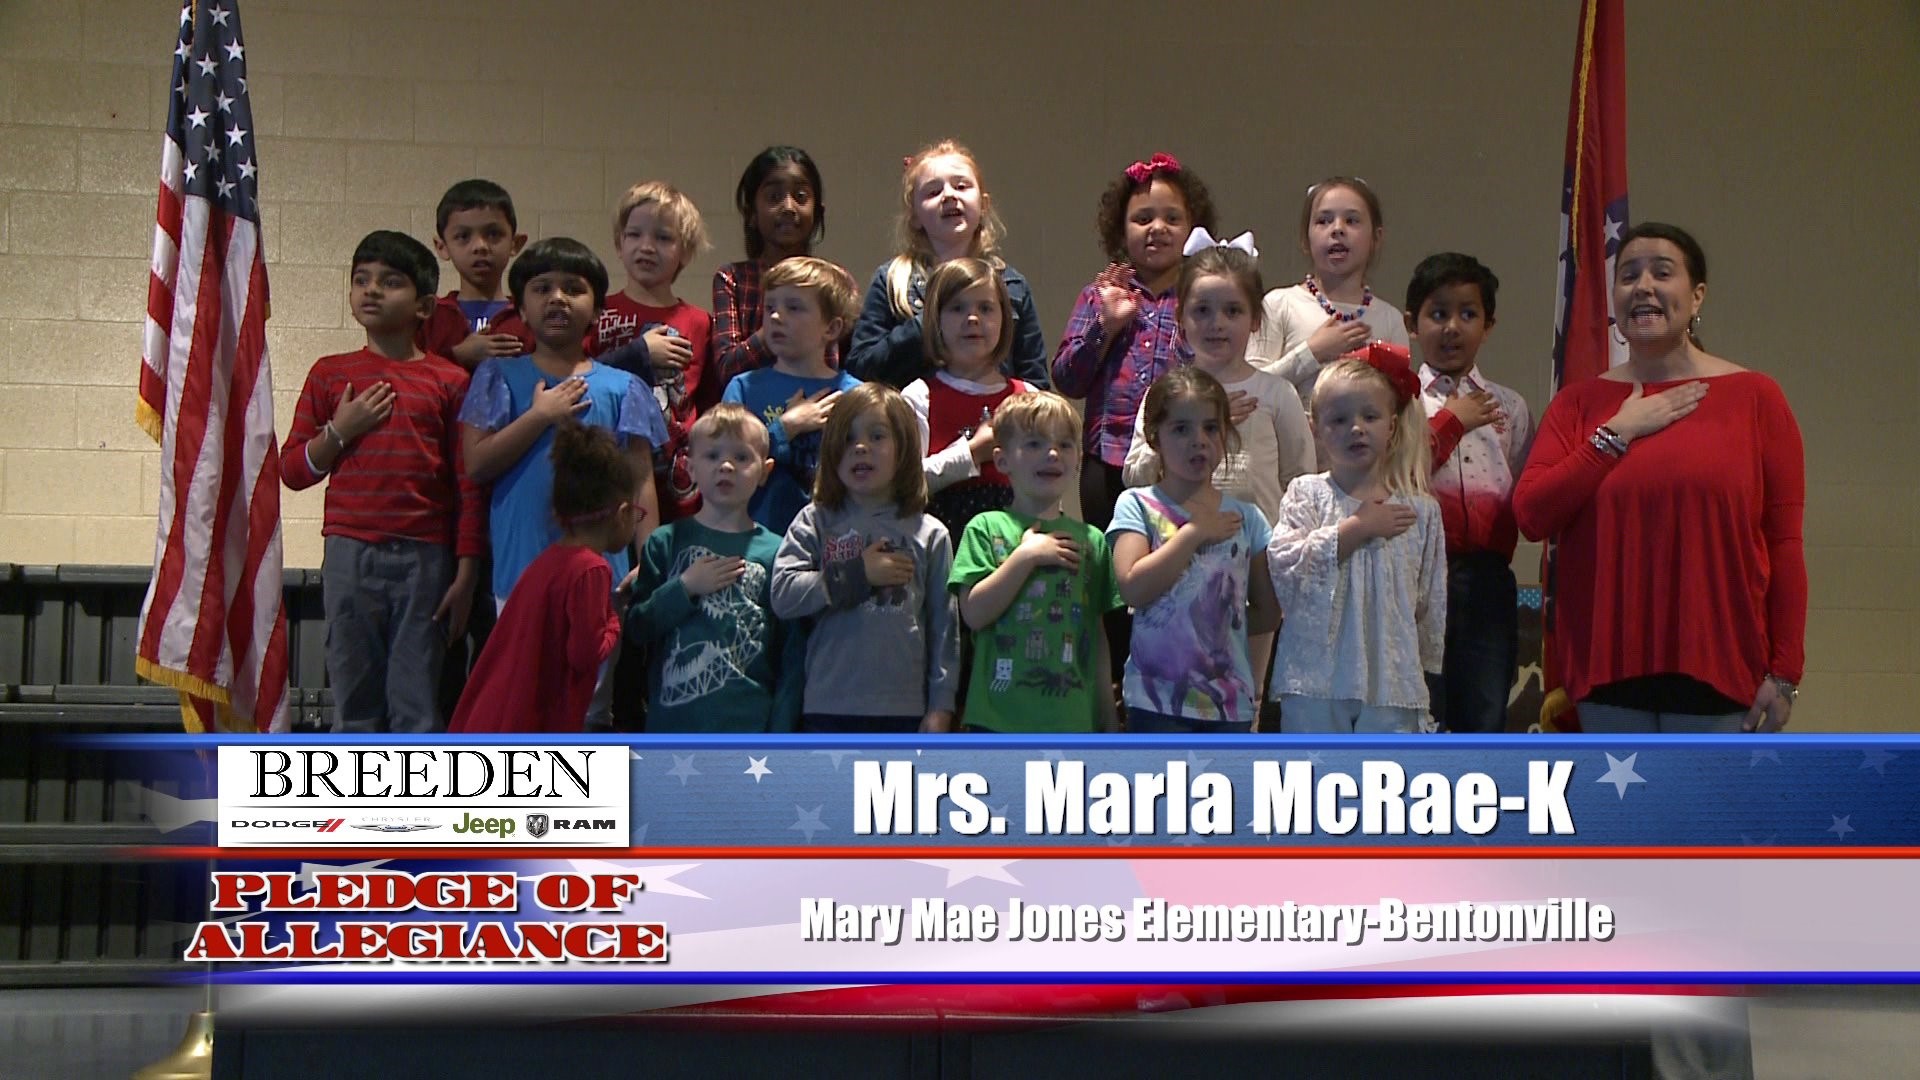 Mrs. Marla McRae  K  Mary Mae Jones Elementary - Bentonville